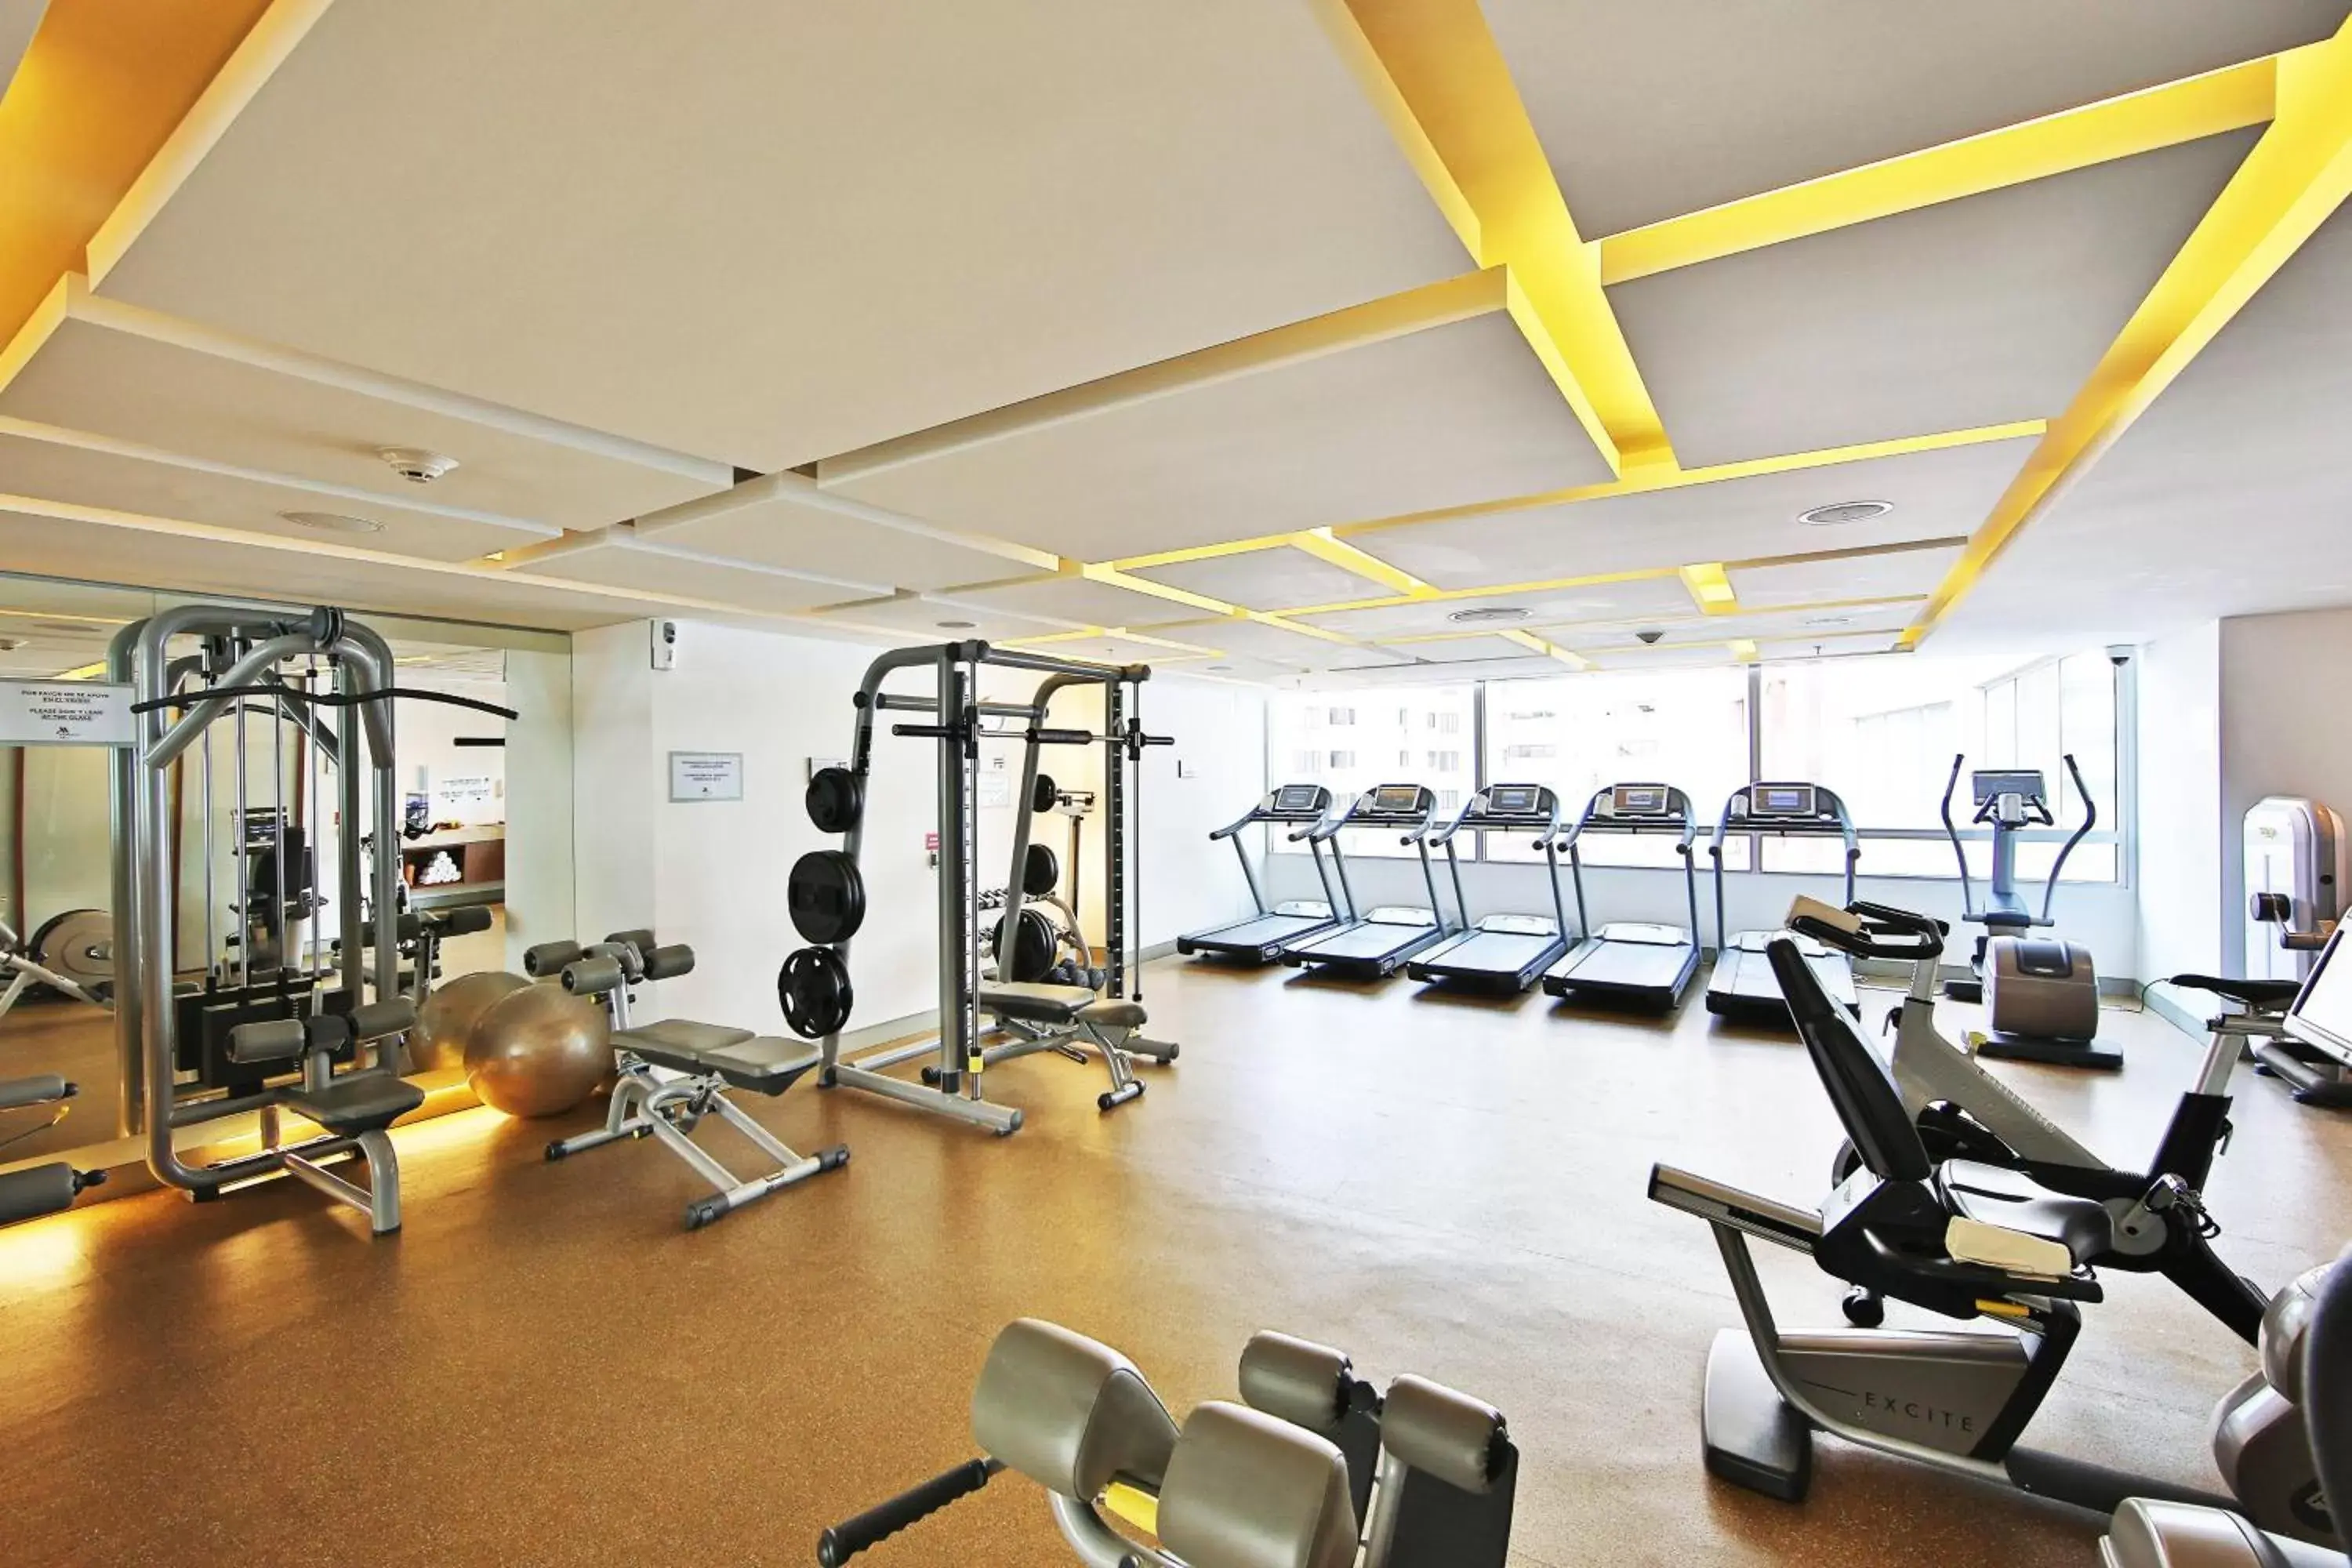 Fitness centre/facilities, Fitness Center/Facilities in Cali Marriott Hotel